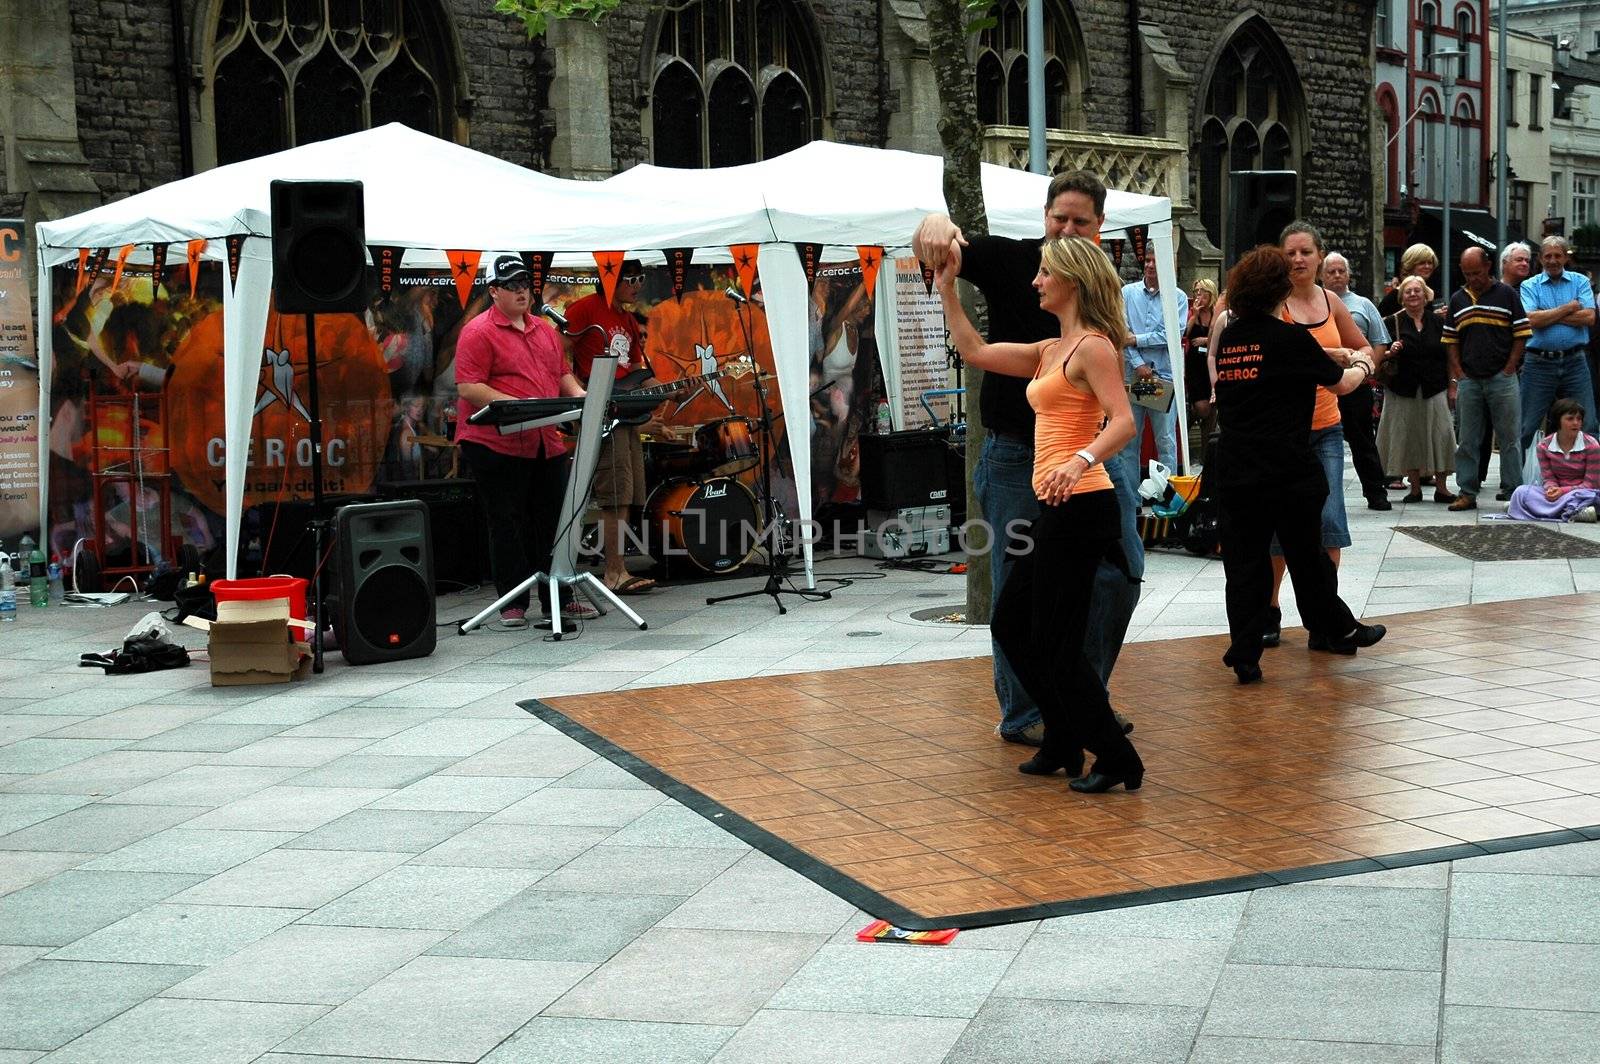 Salsa dance in Cardiff by lehnerda